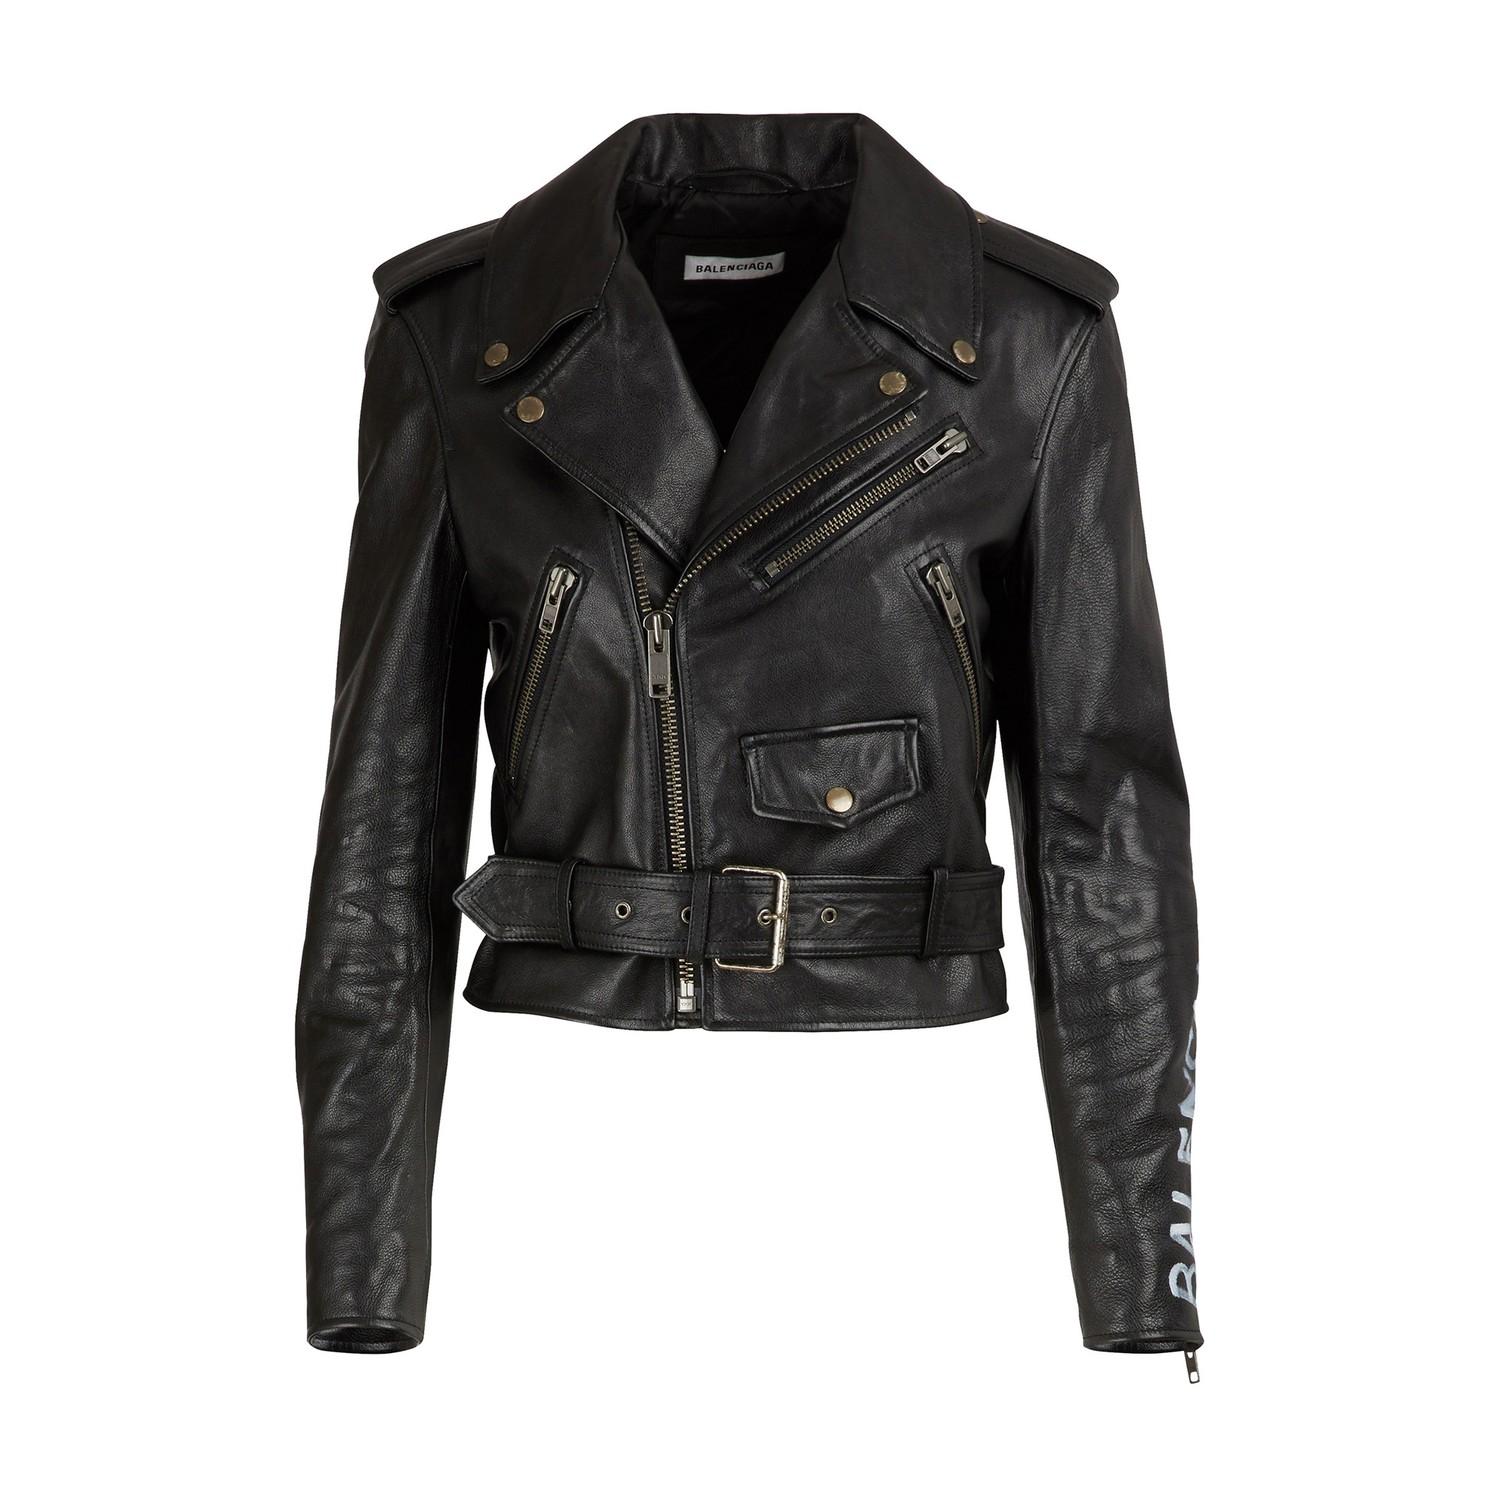 Balenciaga Biker Leather Jacket in Black - Lyst